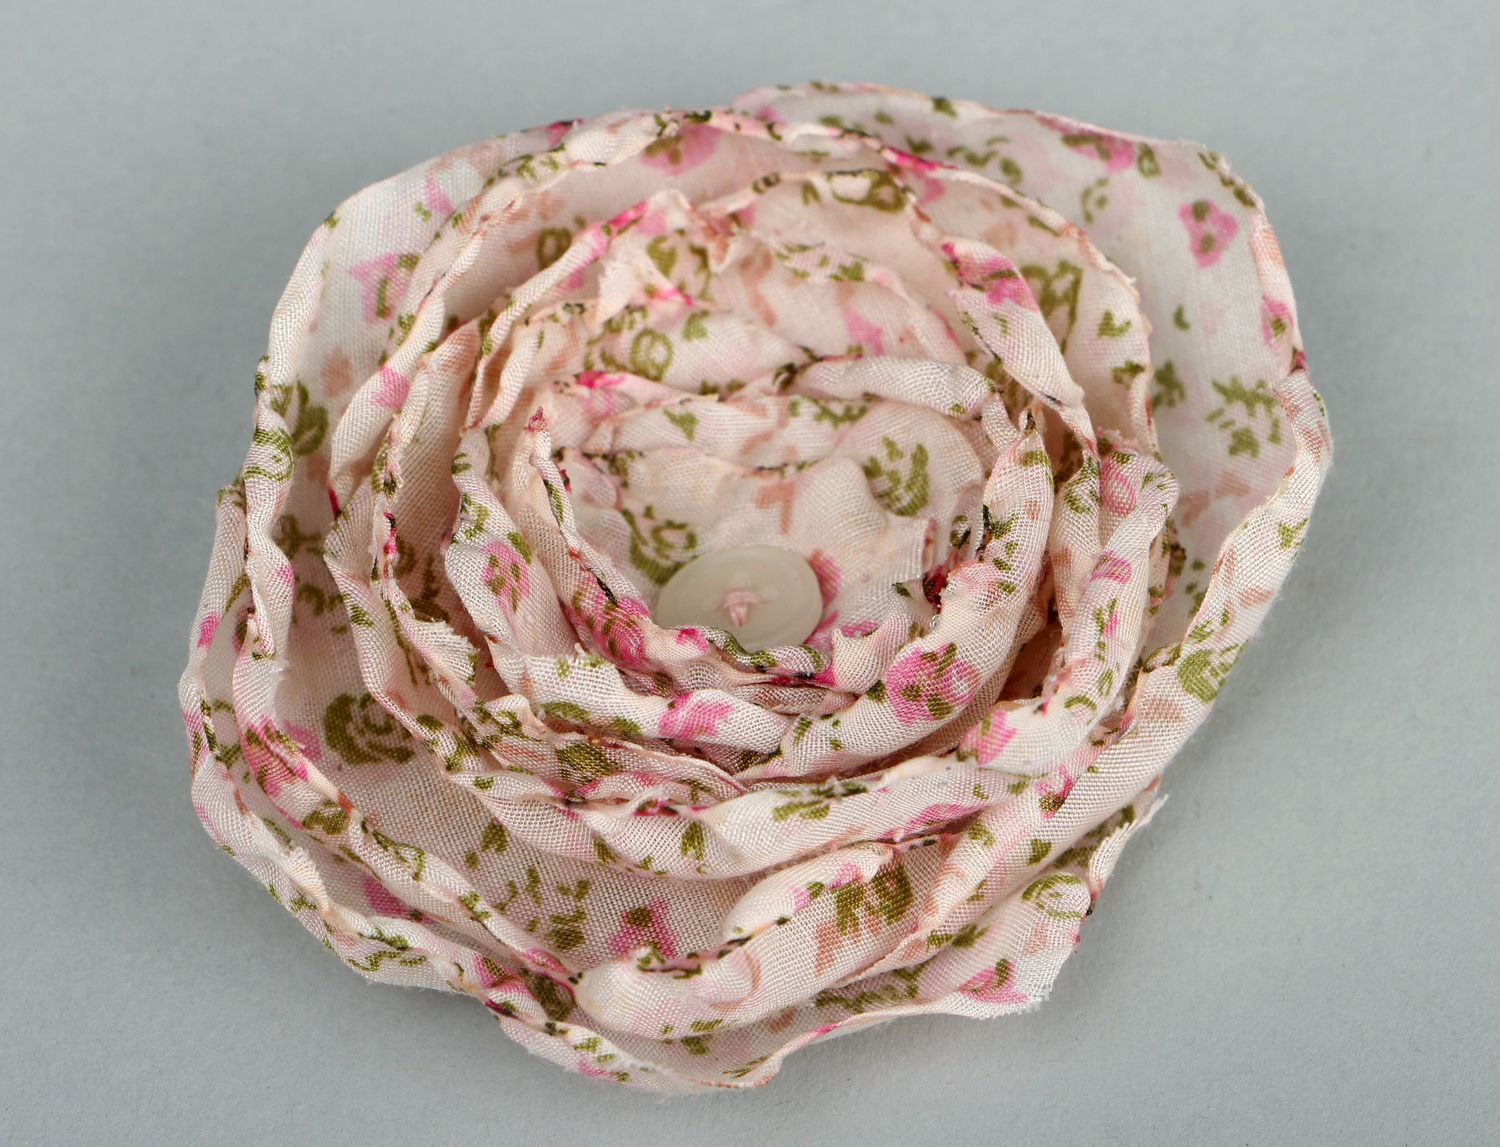 Textil Brosche Rosa Blume foto 1